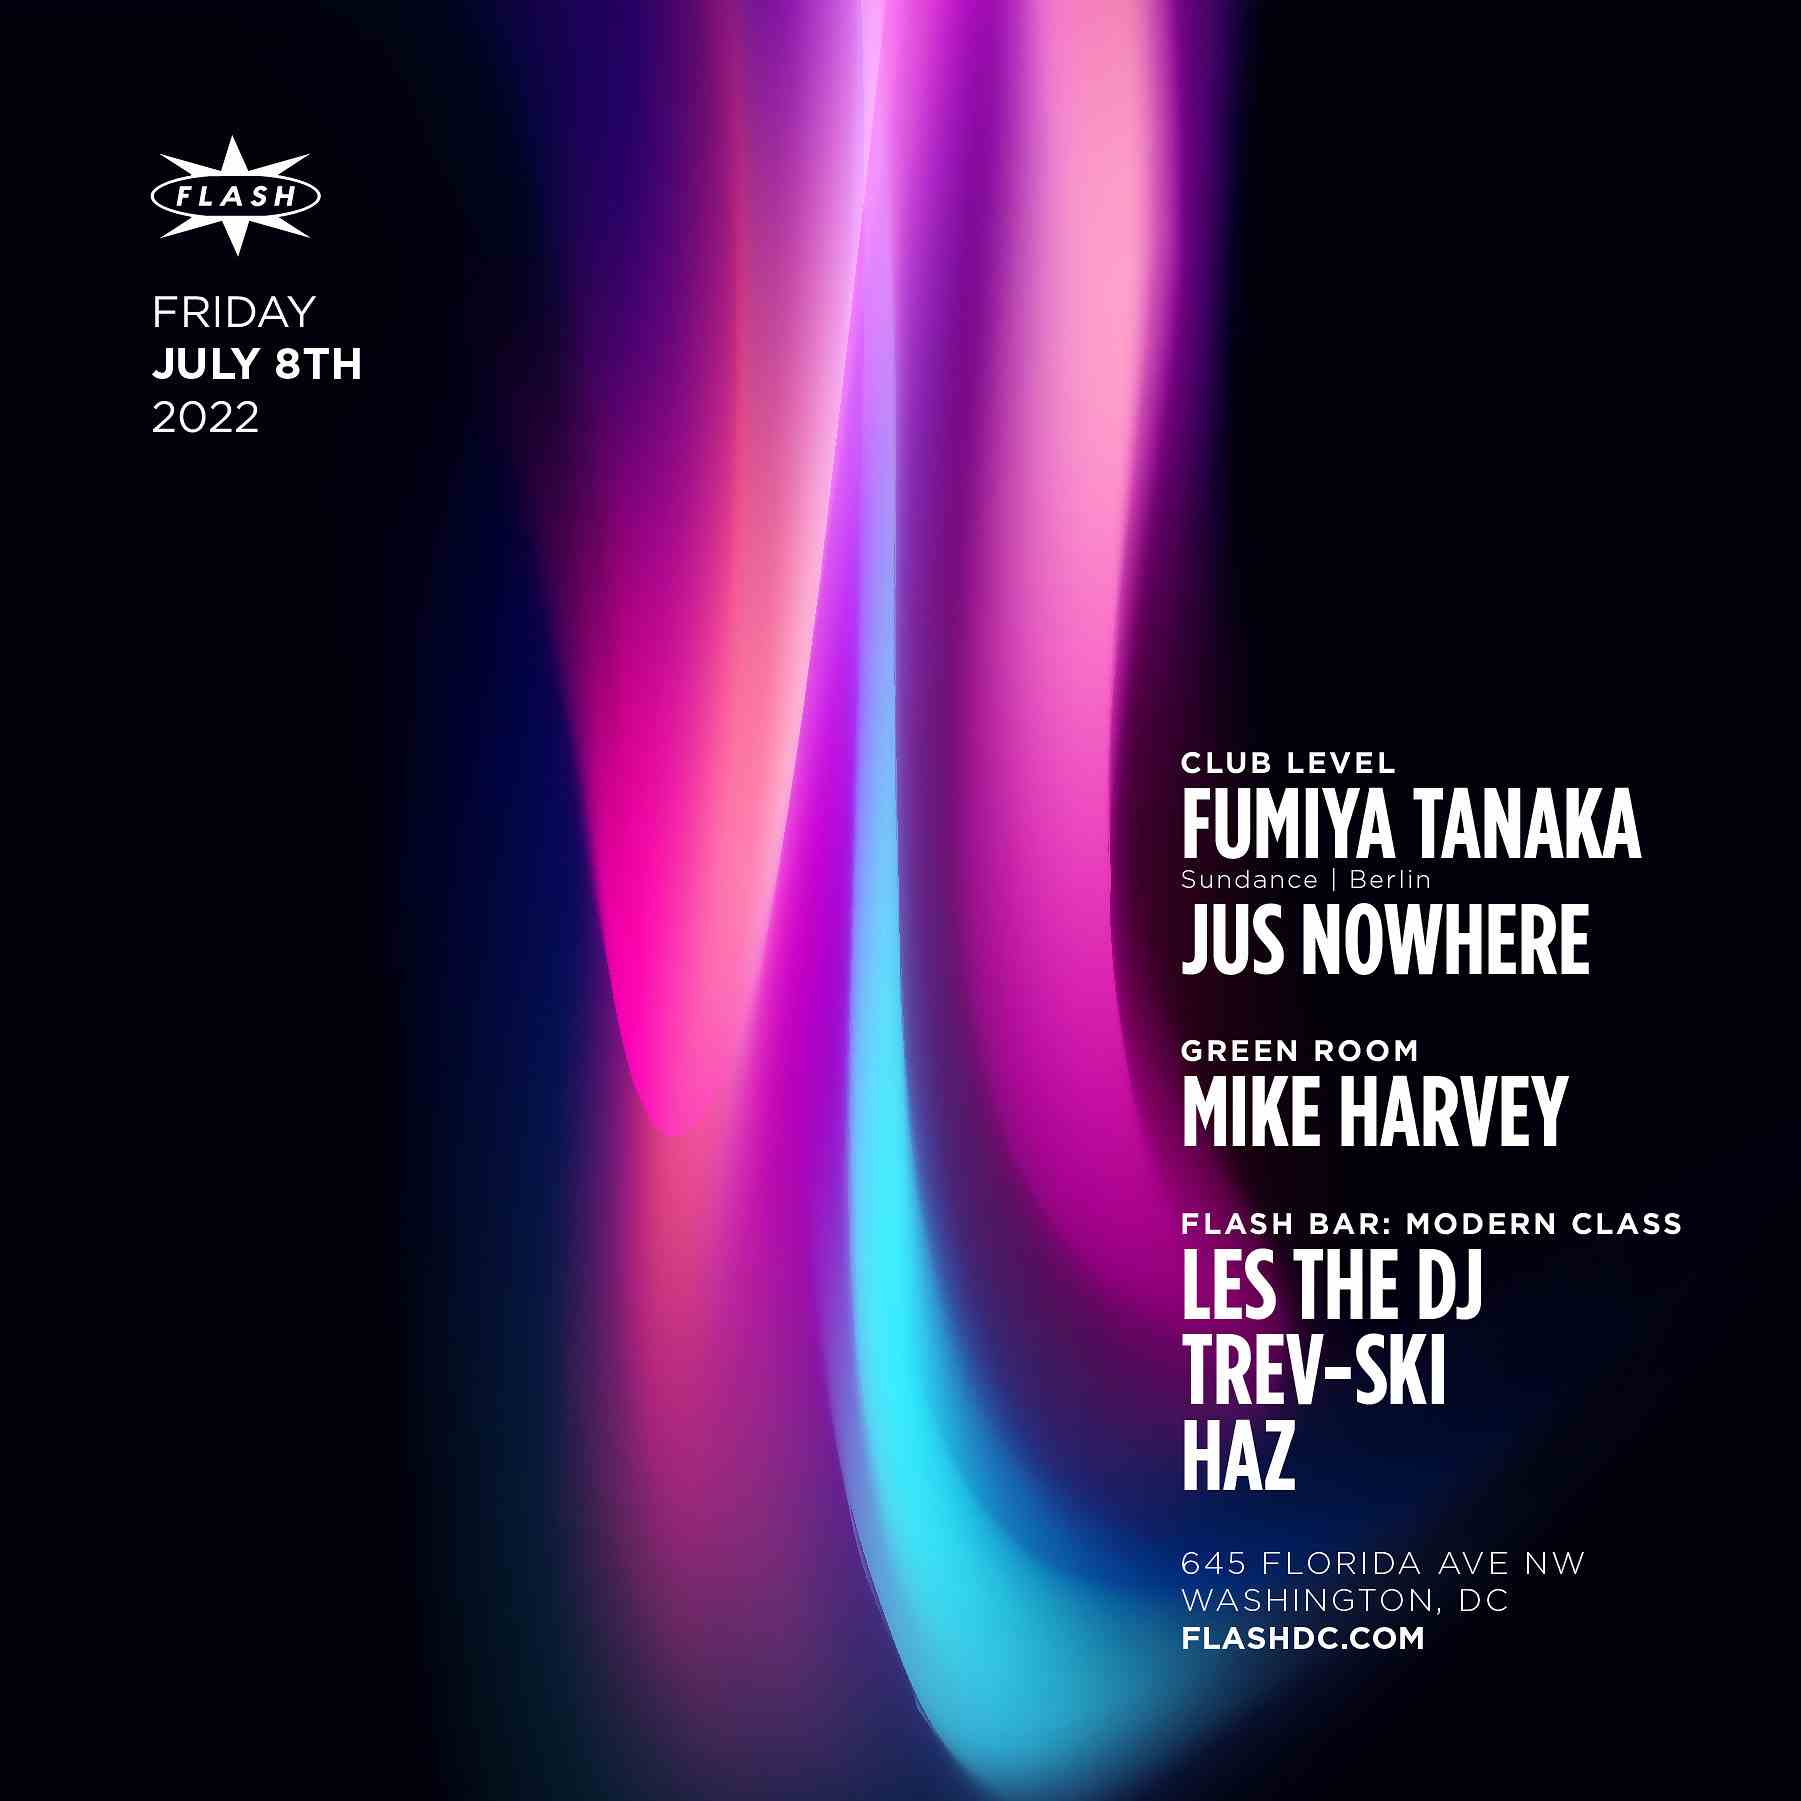 Fumiya Tanaka - Jus Nowhere - Mike Harvey - Modern Class: Les the DJ - Trev-Ski - Haz event thumbnail